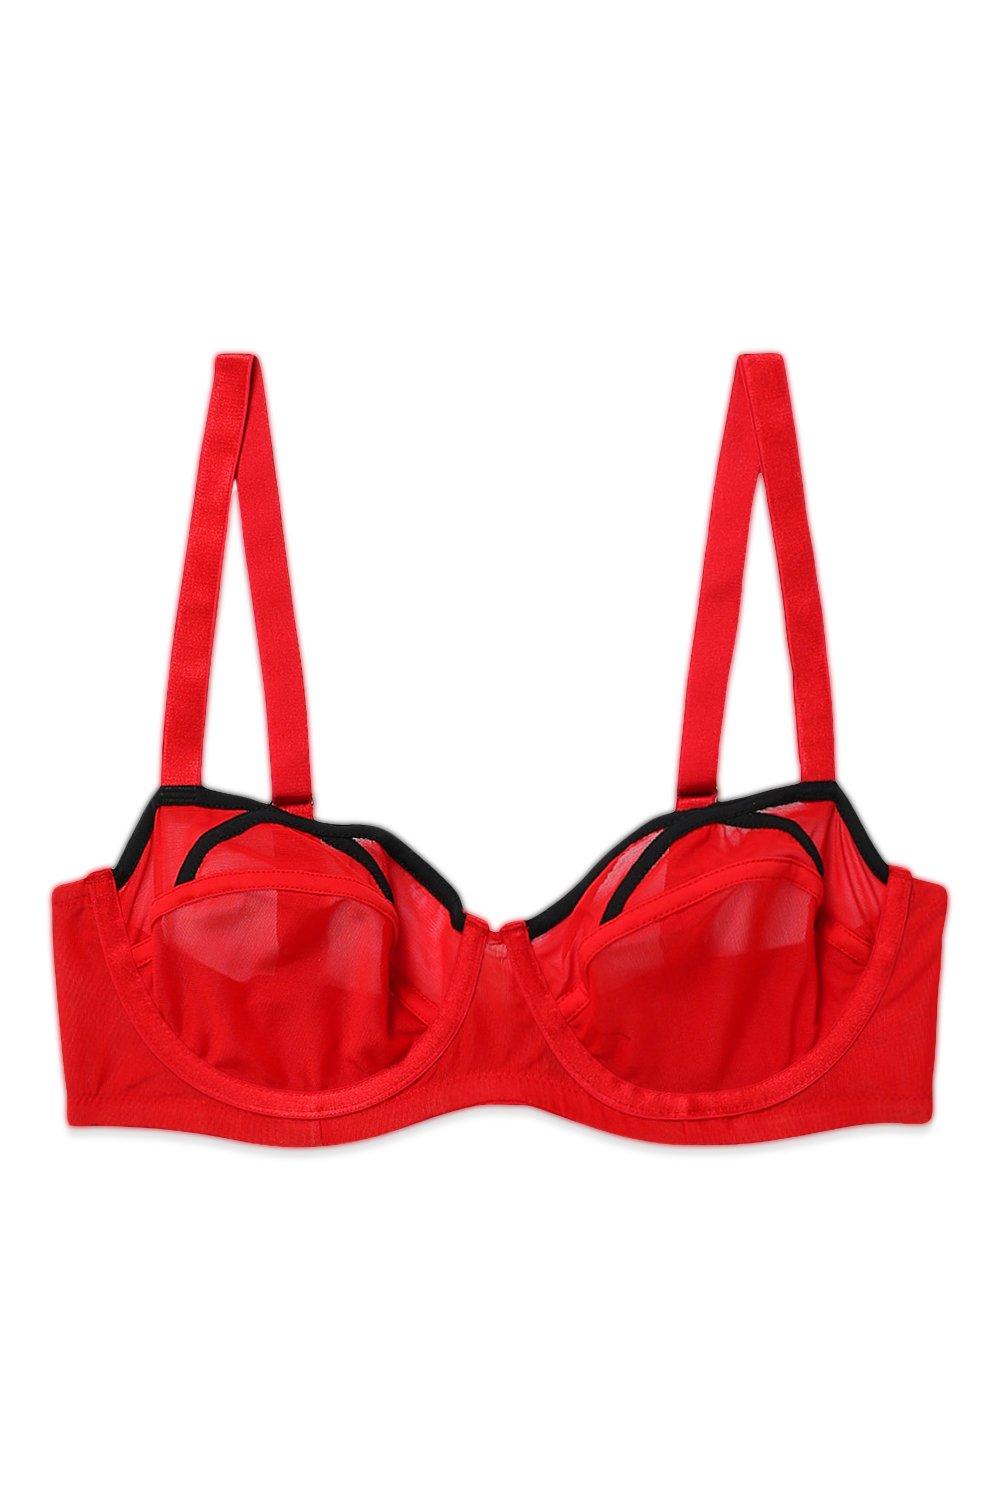 YGVBJHX bras for women， 2pack Contrast Lace Underwire Bra (Size